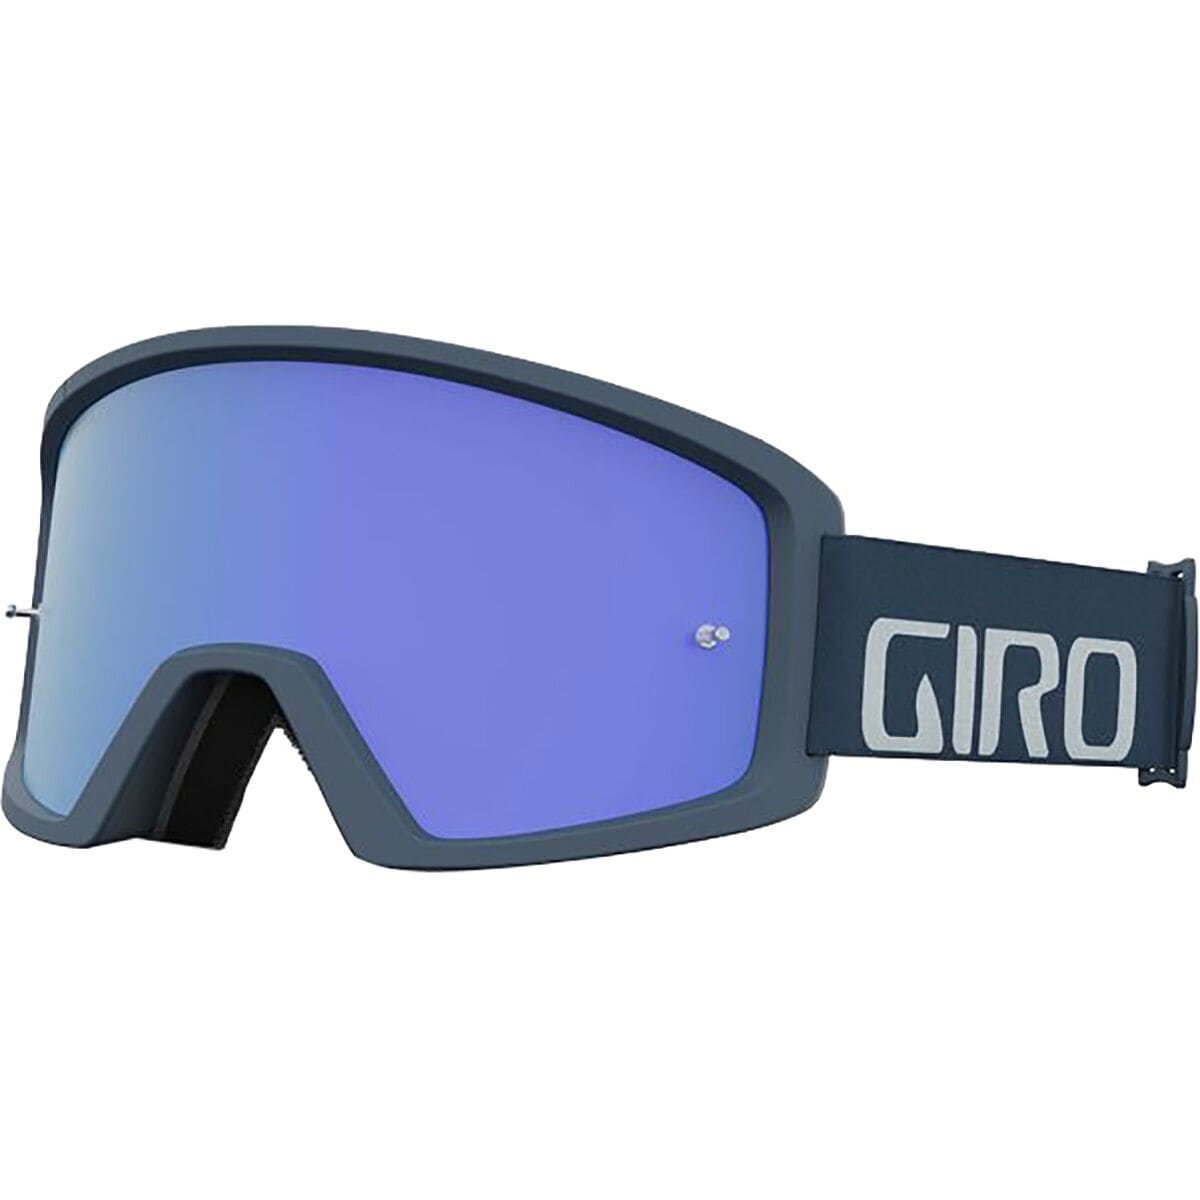 Giro Blok MTB Goggles Portaro Grey, One Size